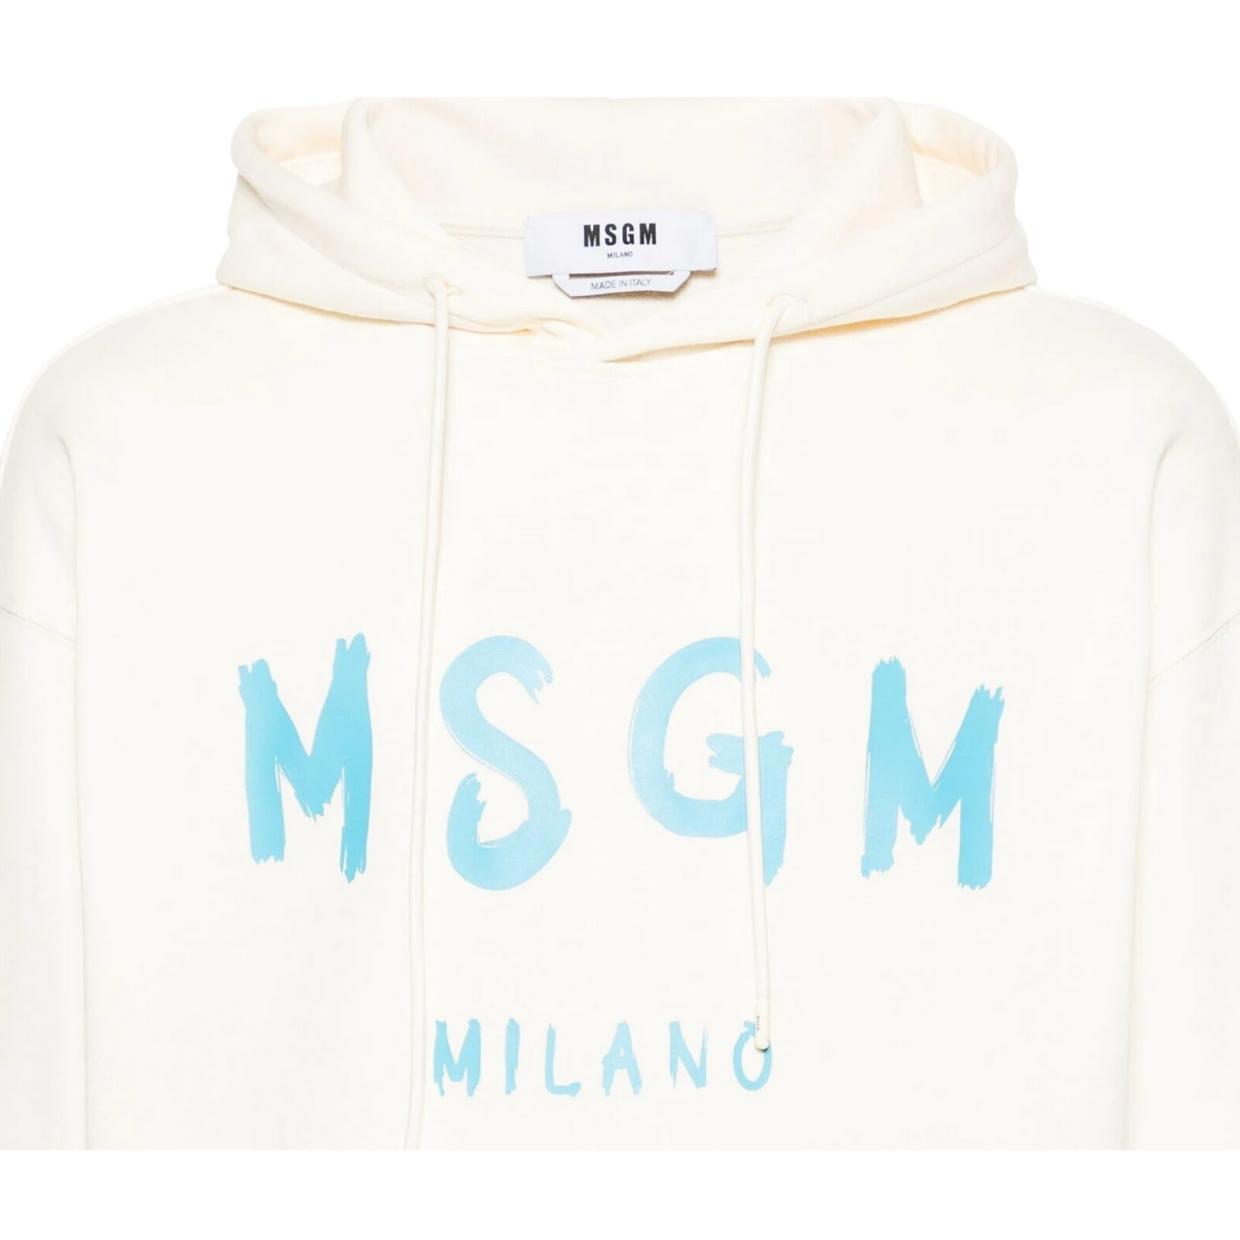 MSGM Contrasting Logo Off-White Hoodie